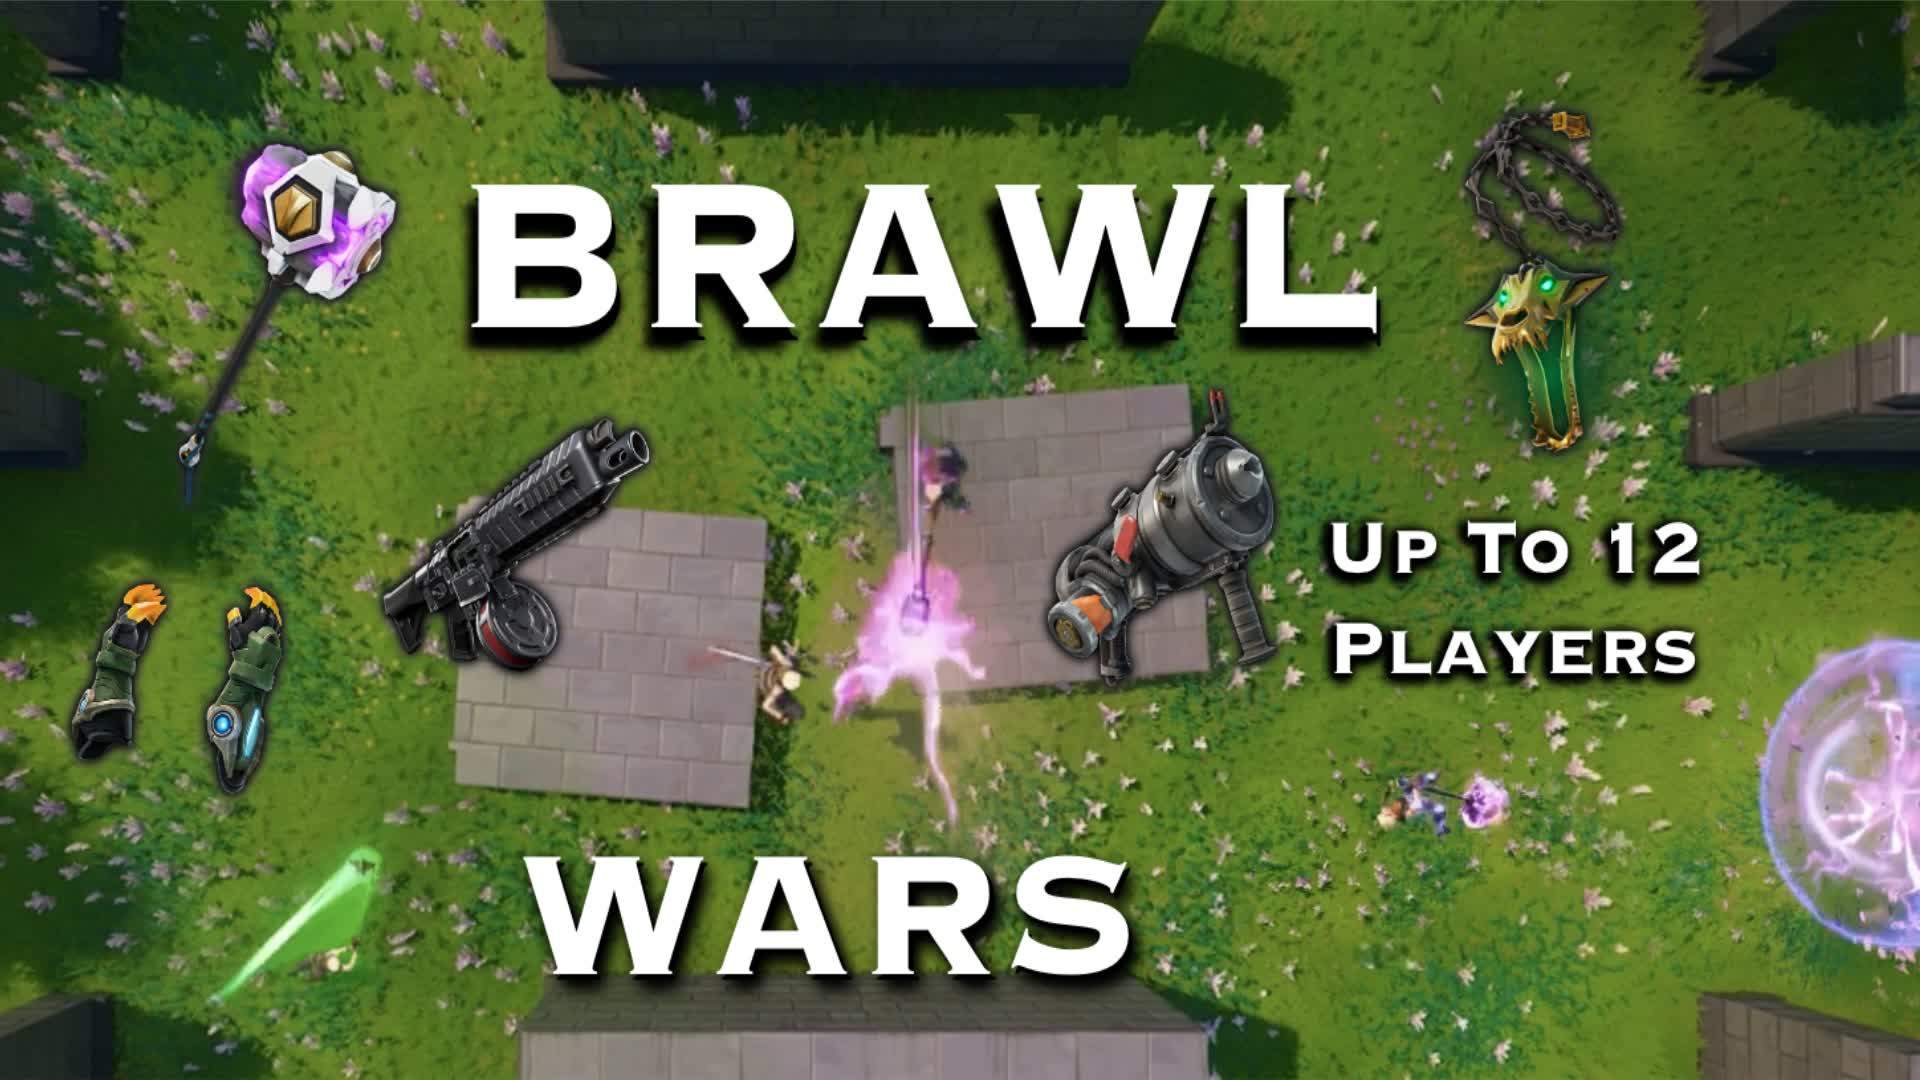 Brawl Wars